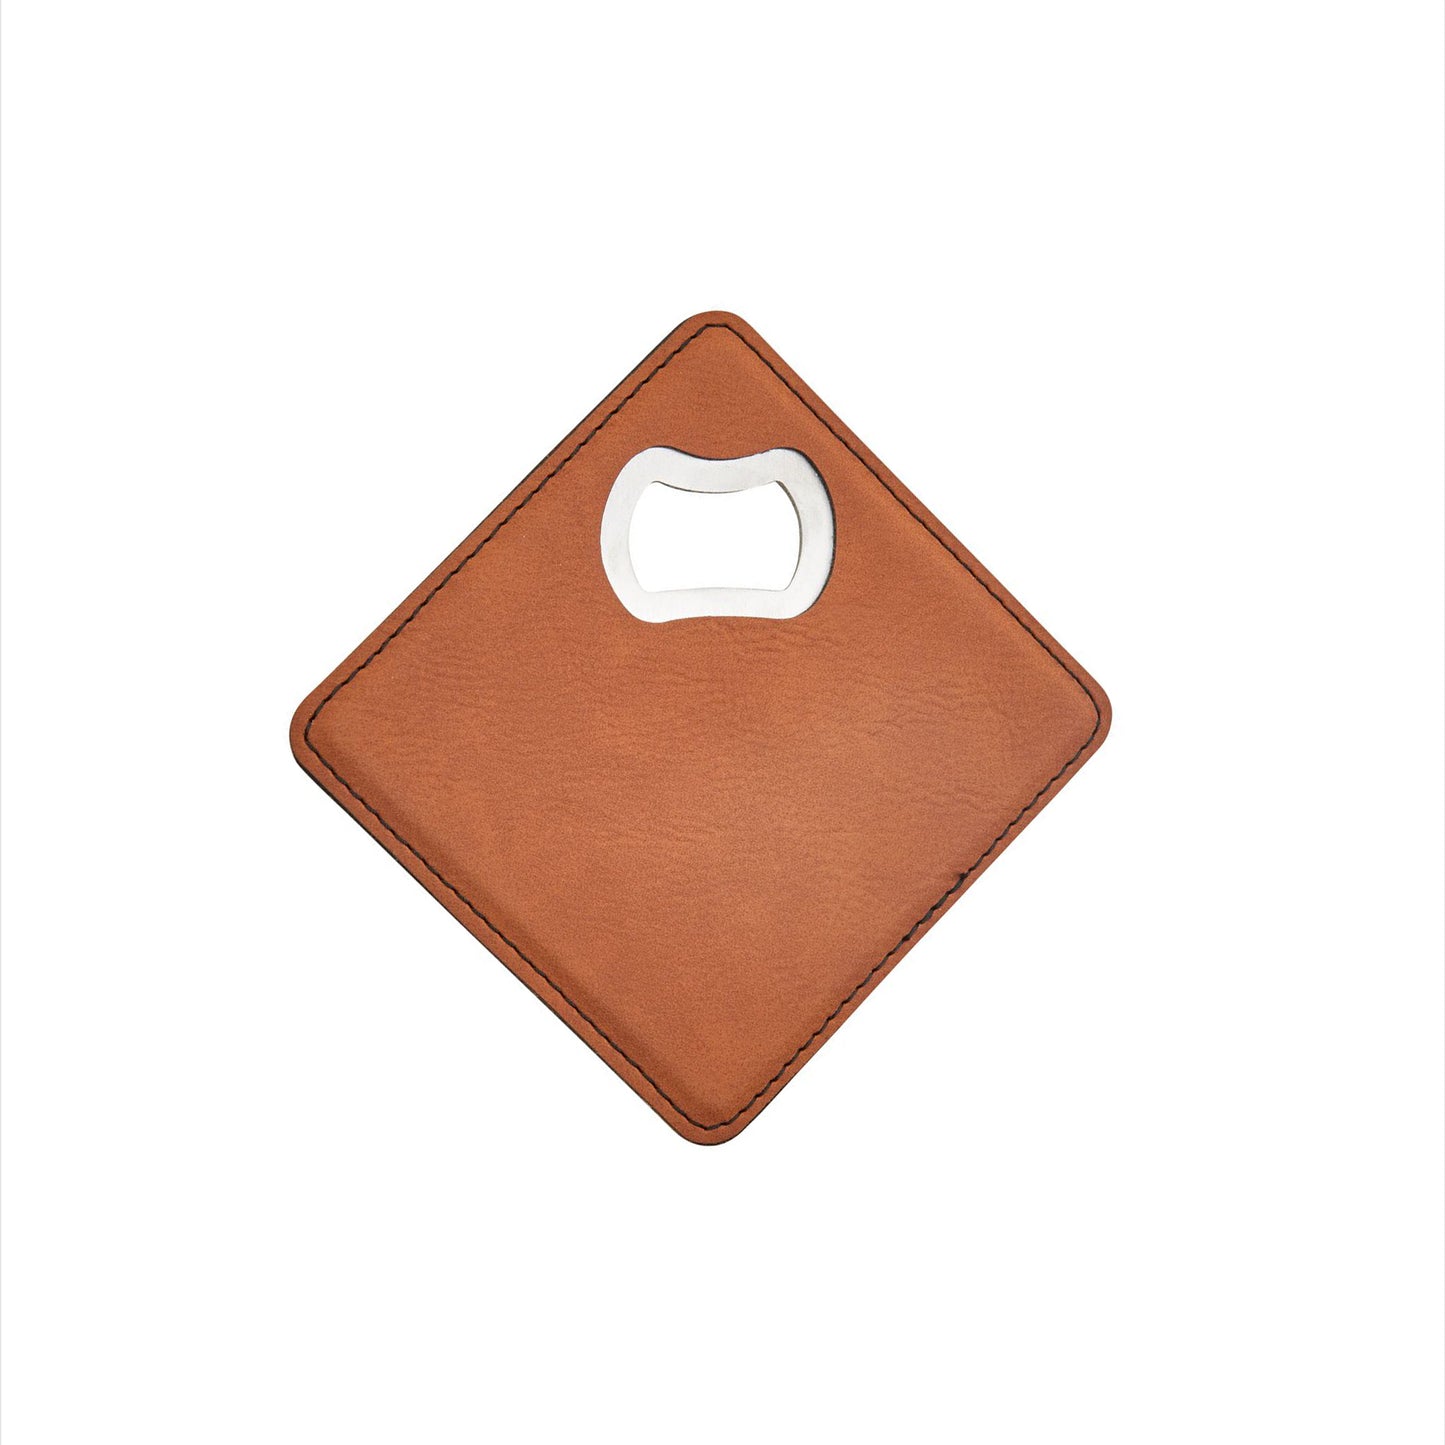 Caramel Leatherette Coaster with Bottle Opener - 4" Square